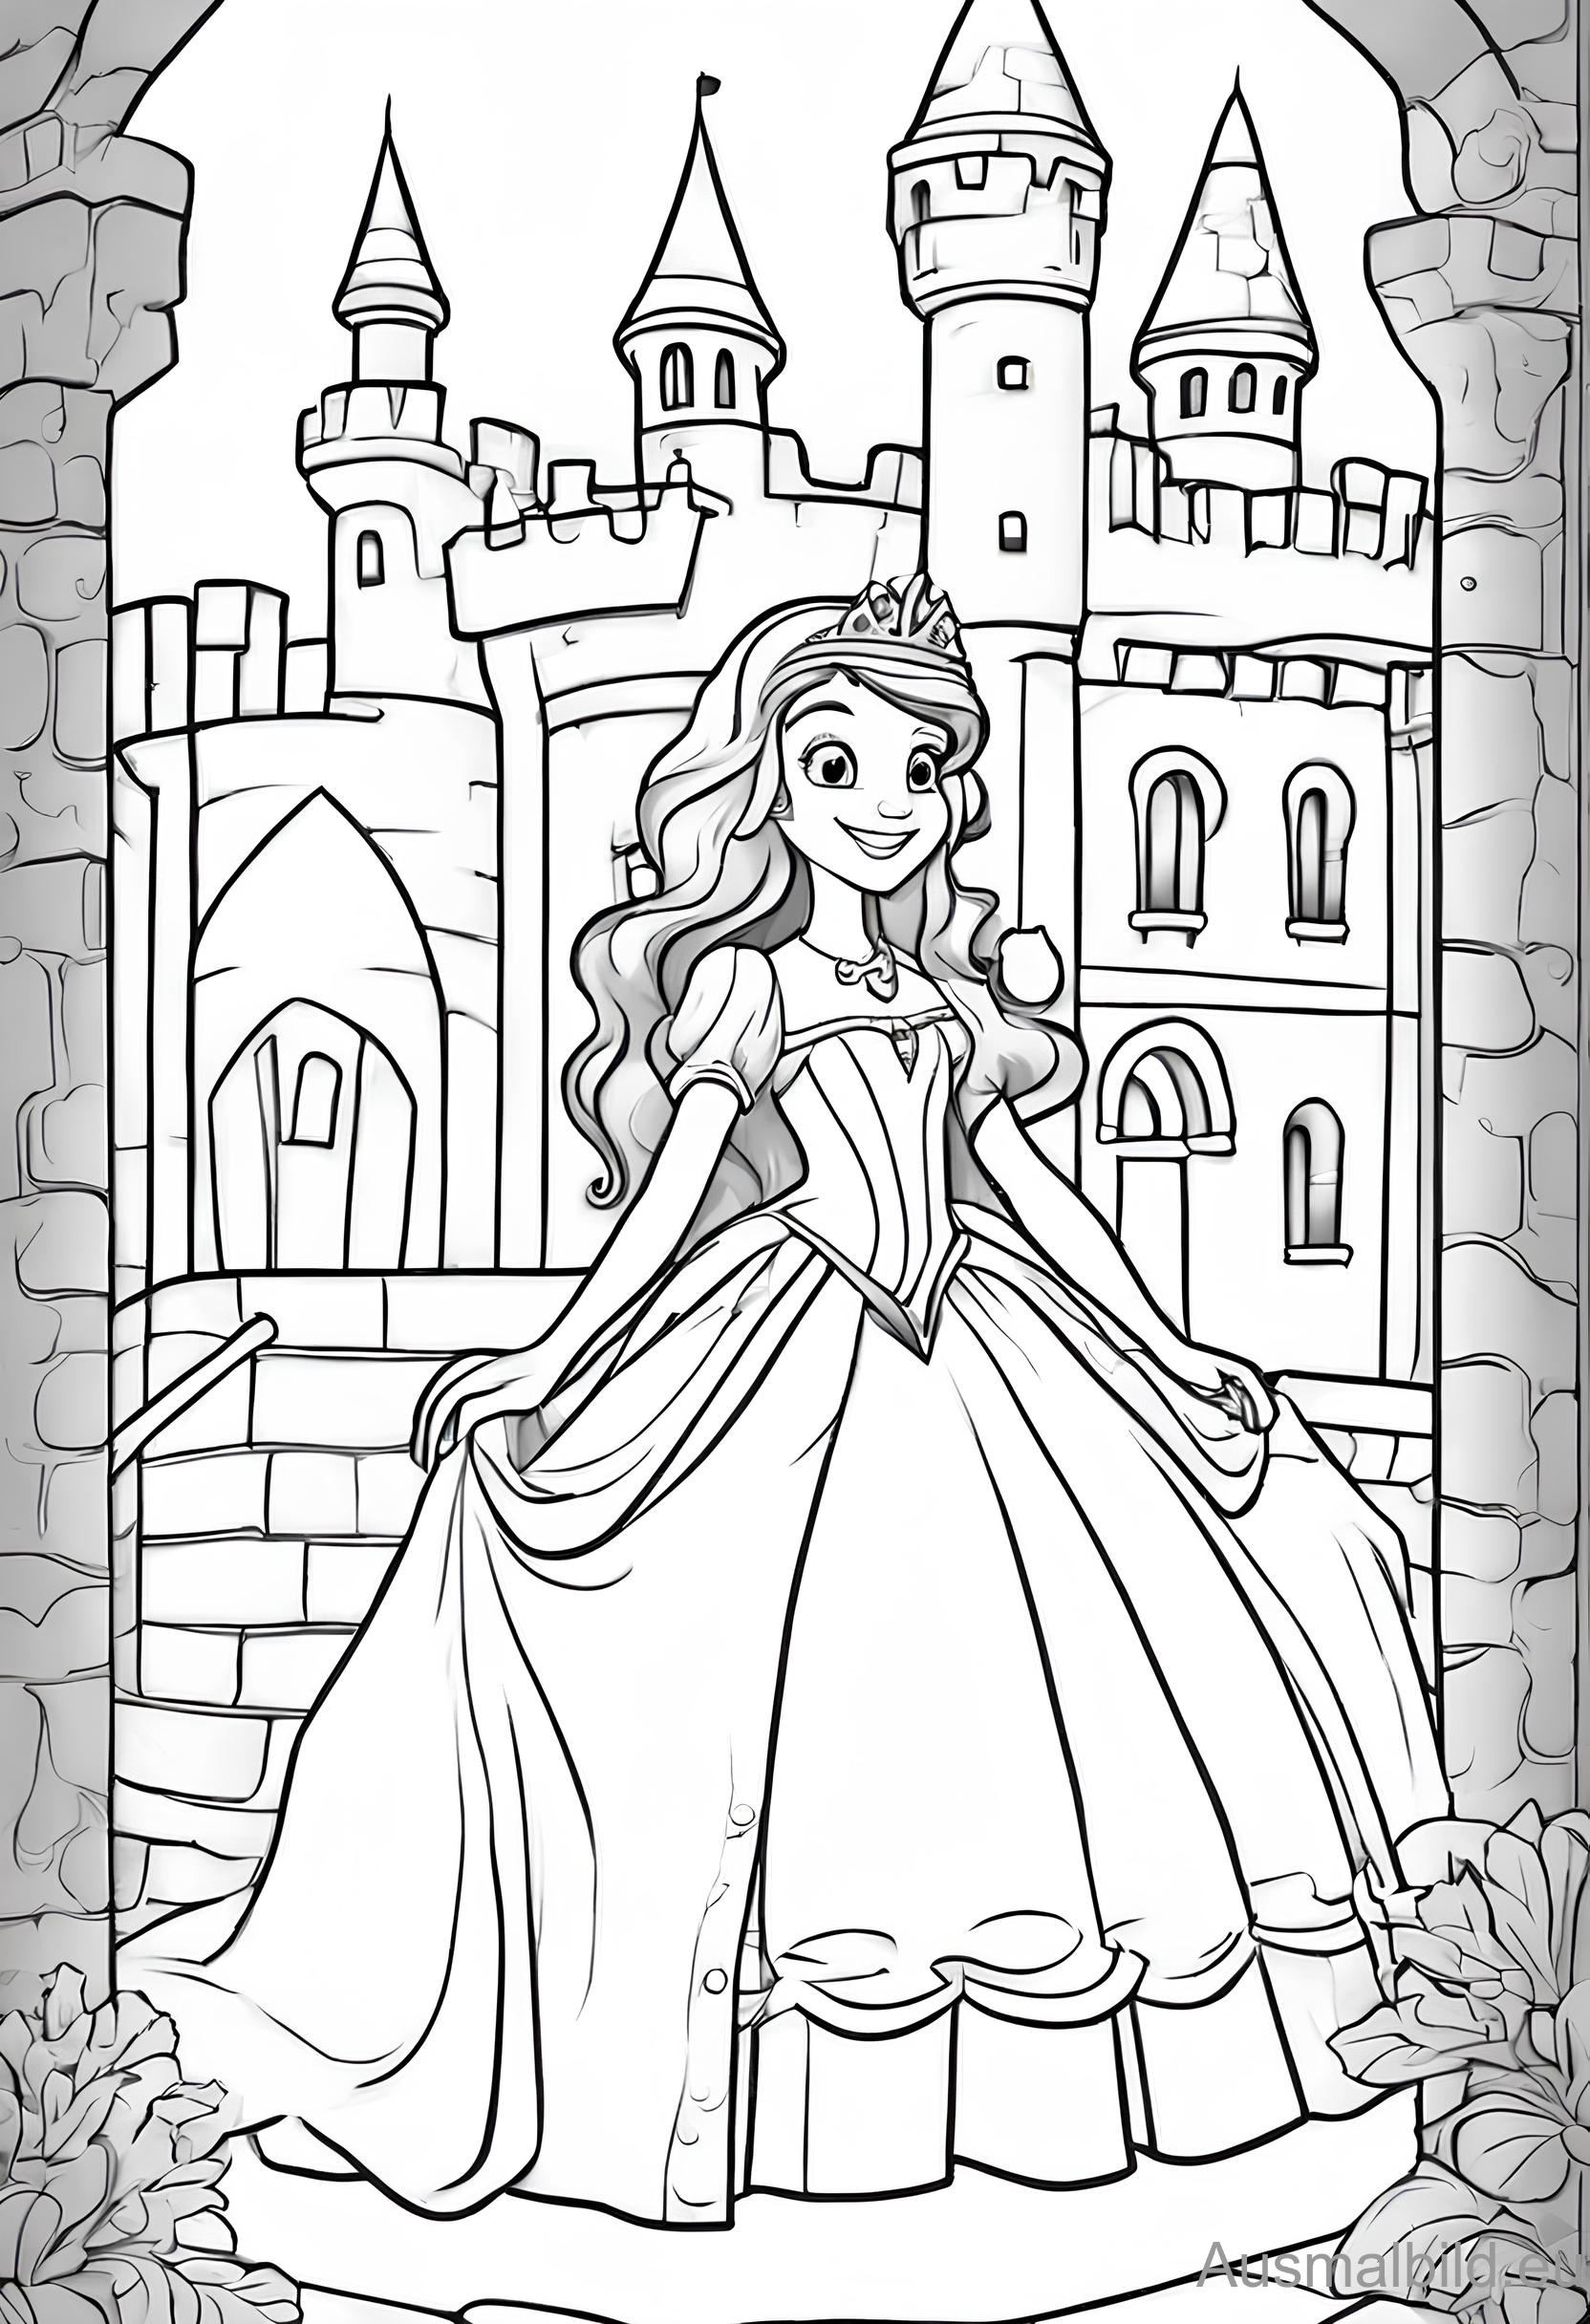 Prinzessin vor dem Schloss